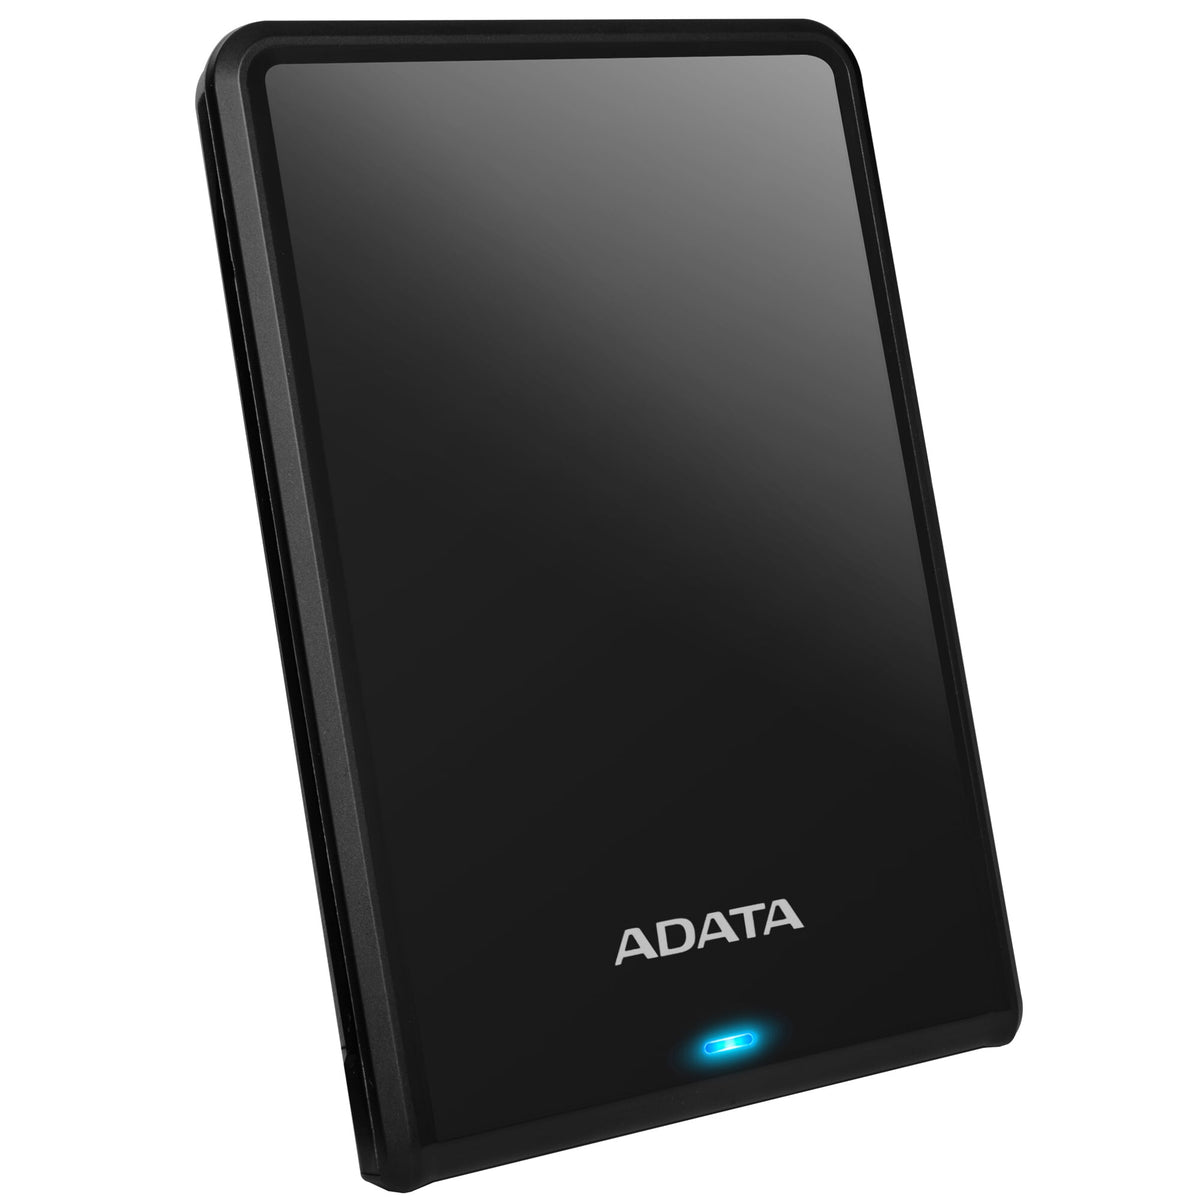 ADATA HV620S - External HDD in Black - 1 TB